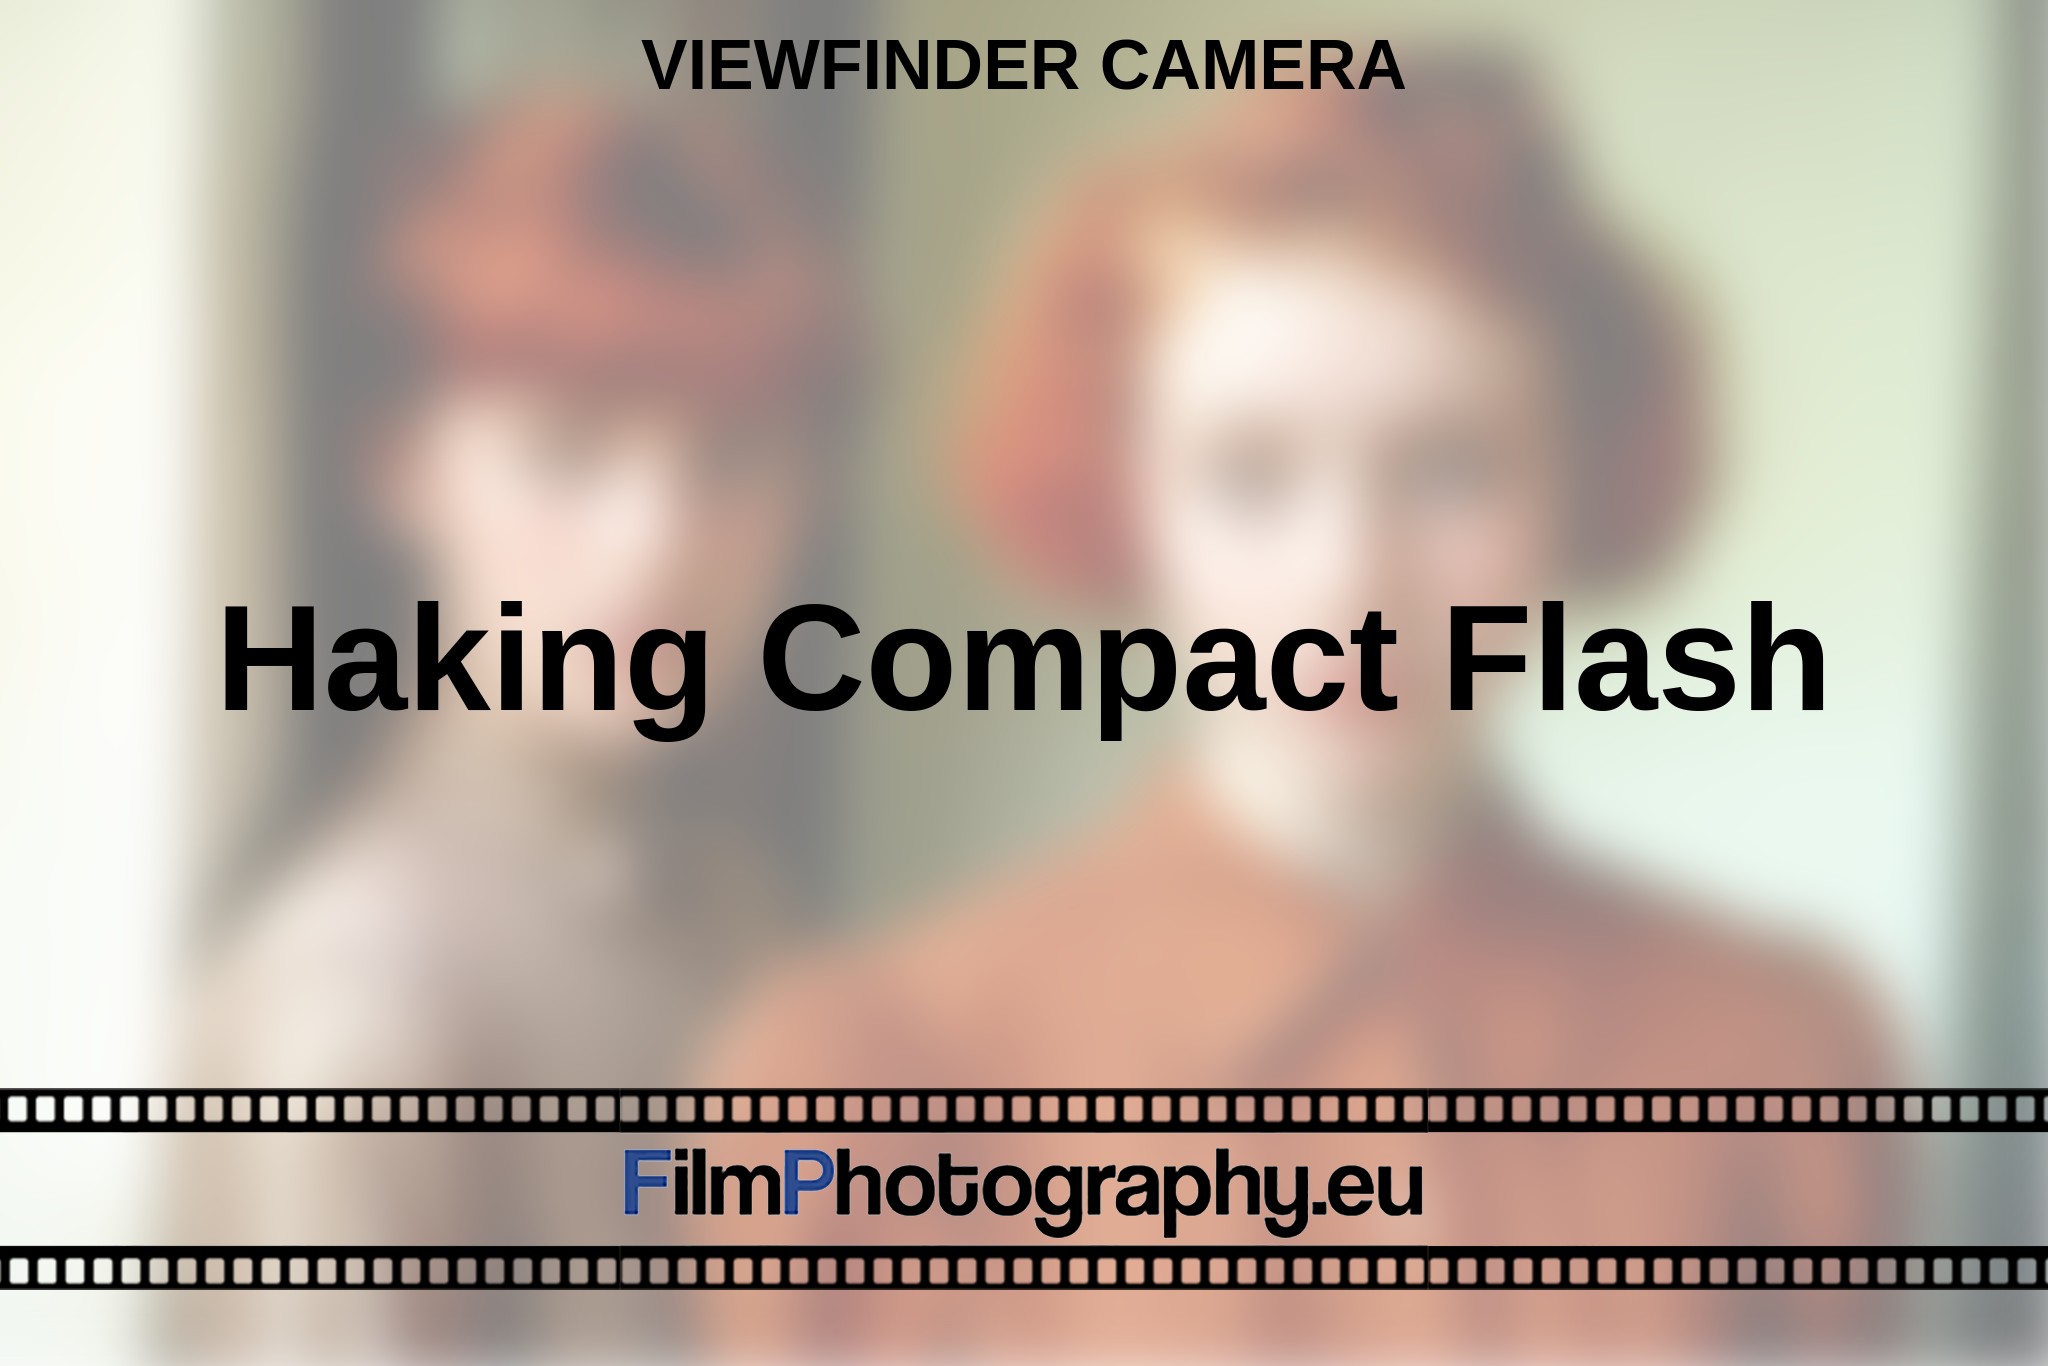 haking-compact-flash-viewfinder-camera-en-bnv.jpg